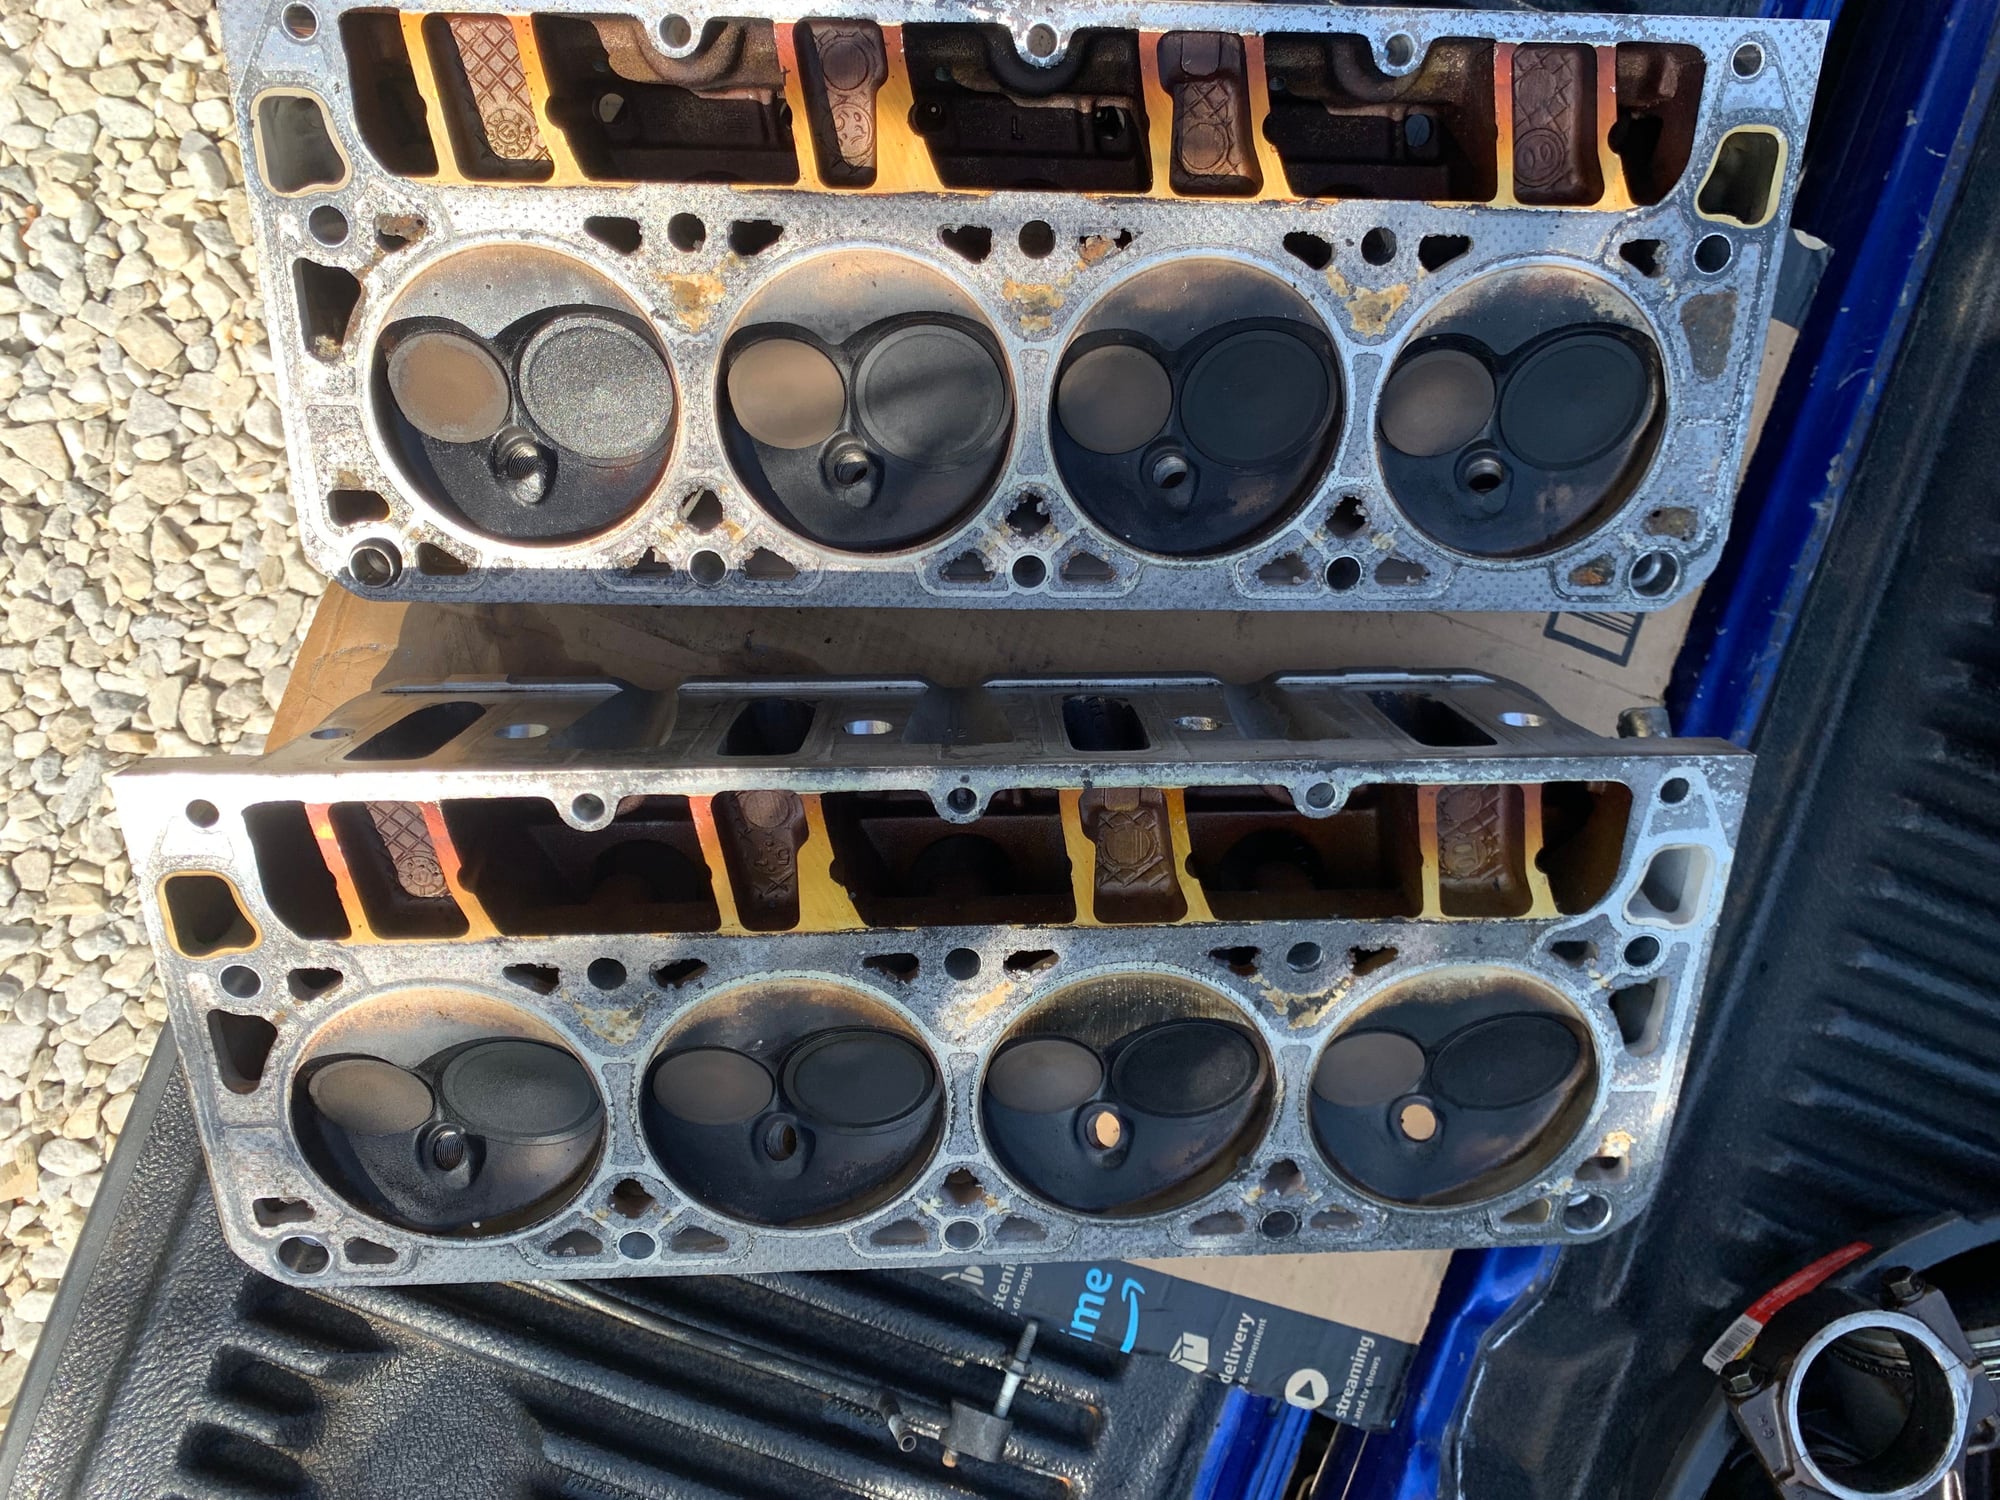 Engine - Internals - LS1 5.7L heads - Used - 1998 to 2002 Chevrolet Camaro - West Palm Beach, FL 33413, United States